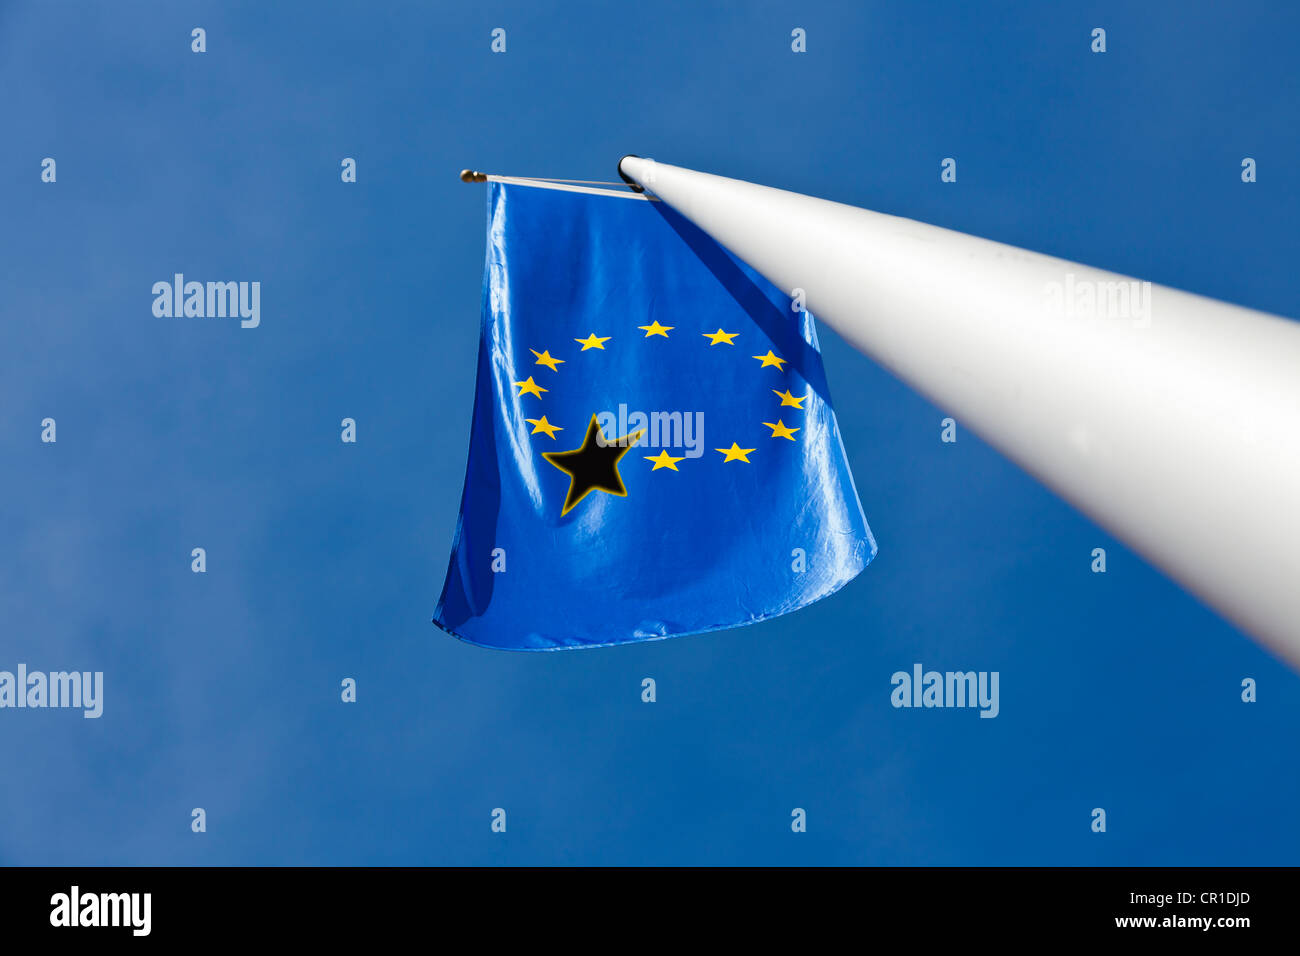 European flag with EU stars and one black star, on a flagpole, symbolic image Stock Photo